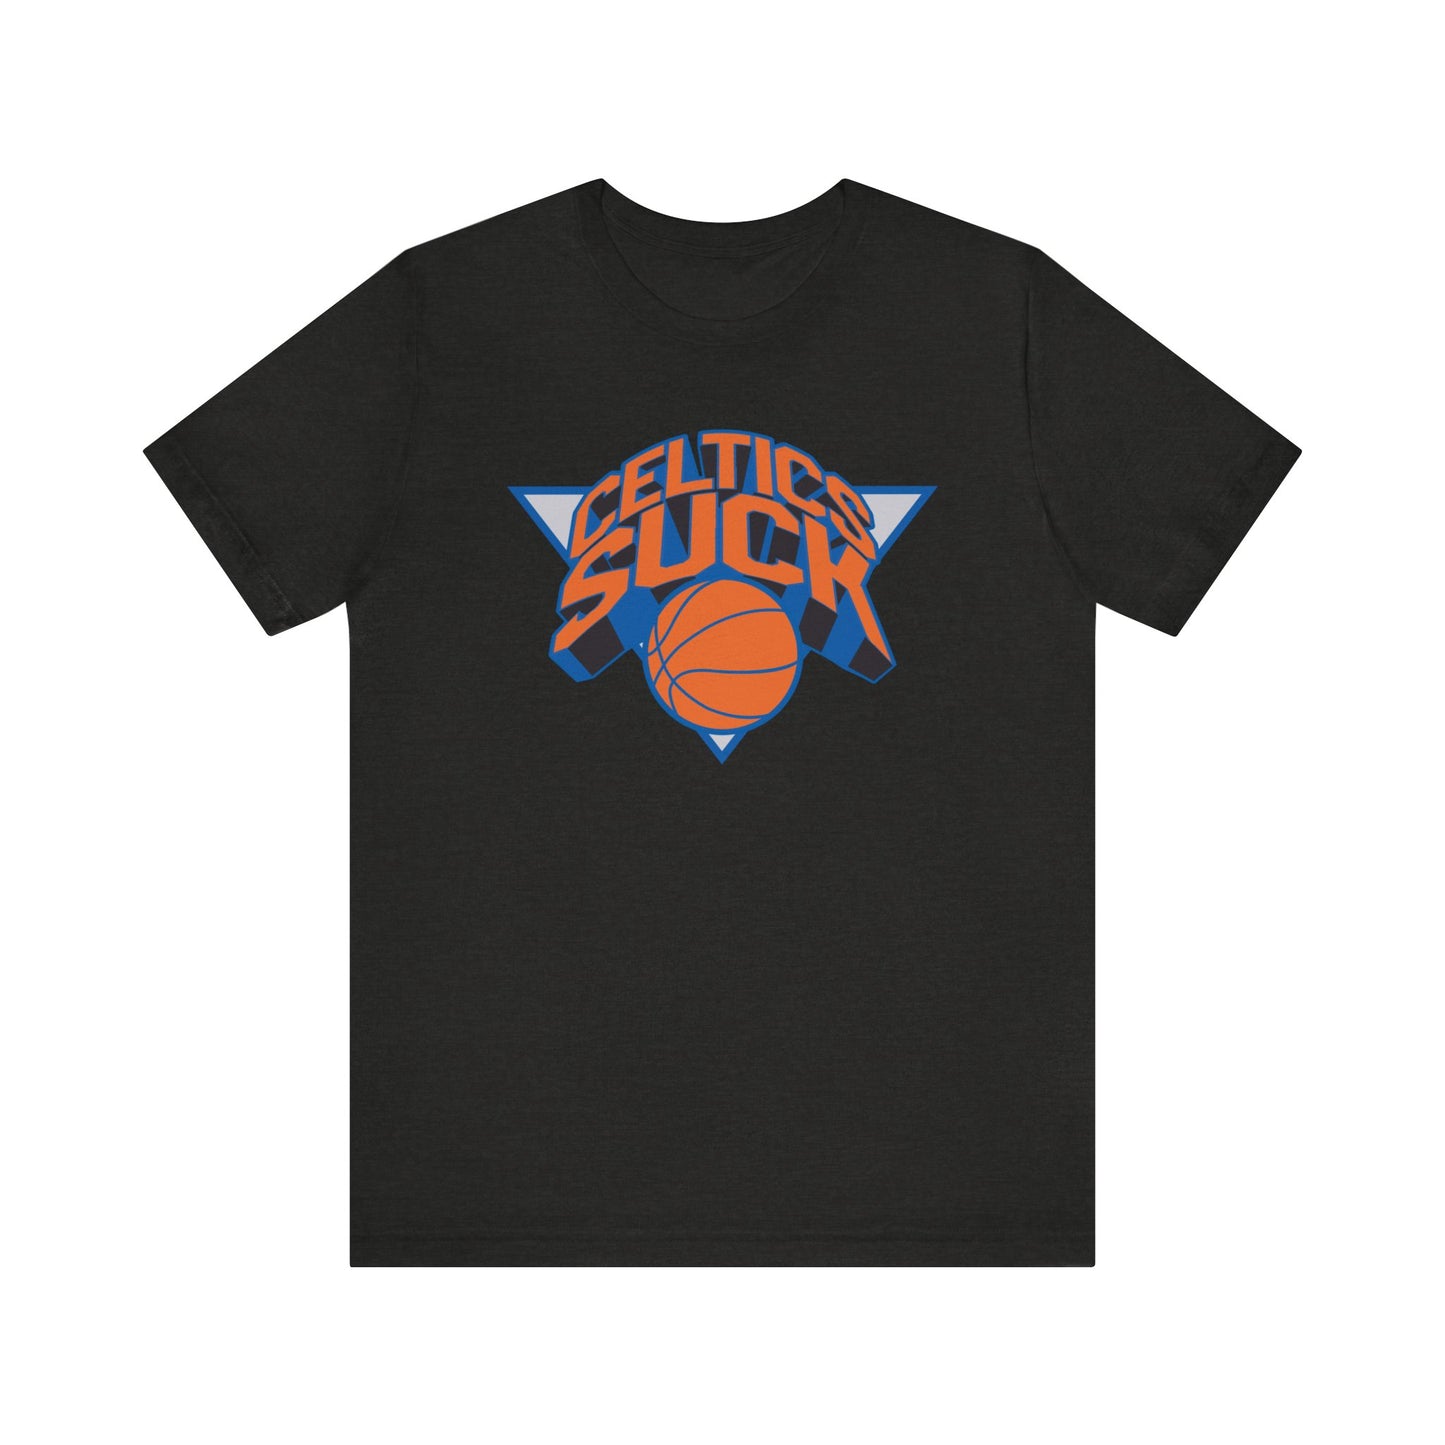 Seltix Suck (for Knicks fans) - Unisex Jersey Short Sleeve Tee